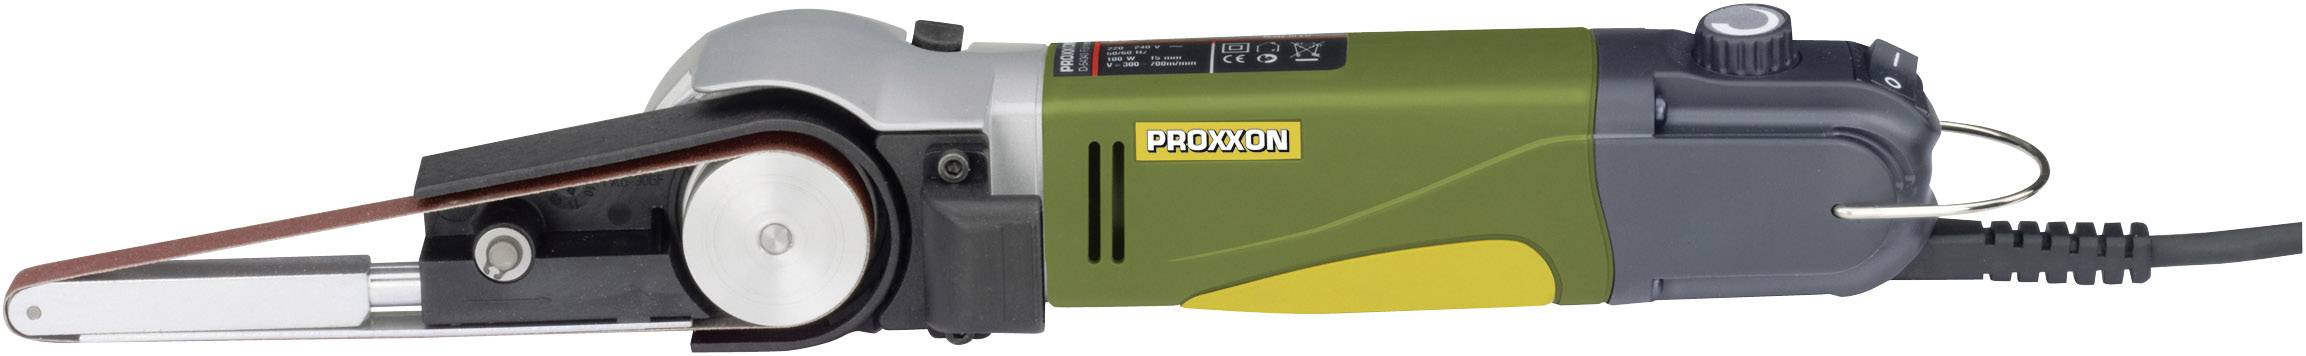 PROXXON Bandschleifer inkl. Koffer 100 W Proxxon Micromot BS/E 28536 10 x 110 mm